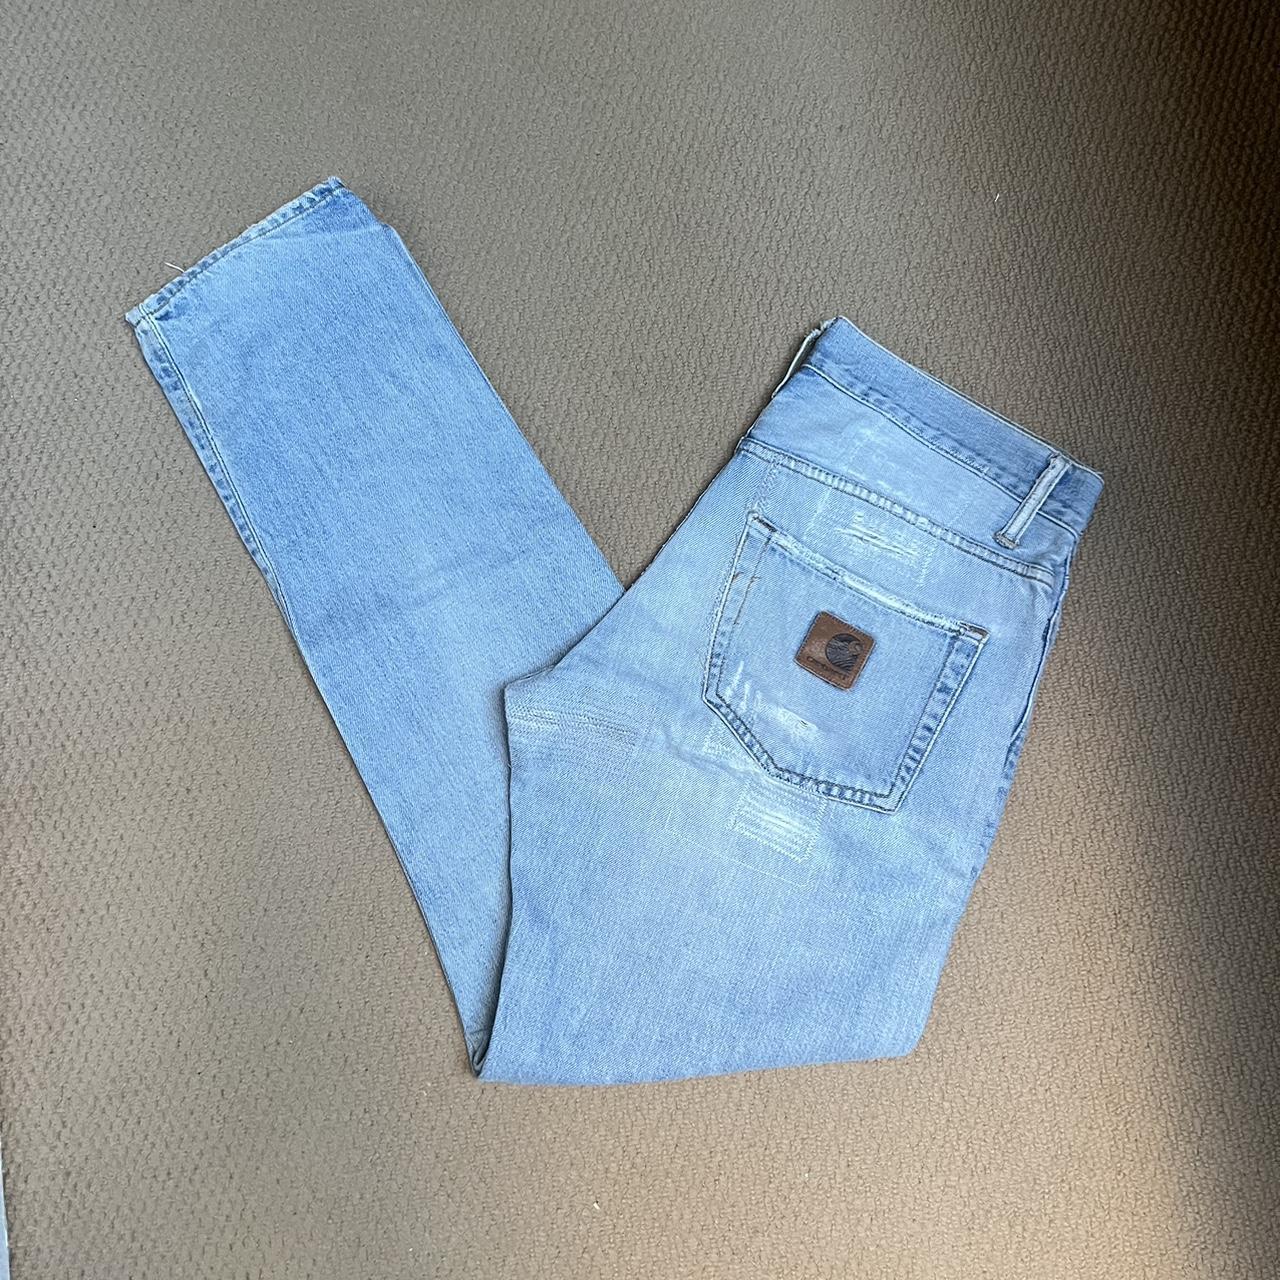 Carhartt WIP Klondike pant jeans 31x32 Good... - Depop